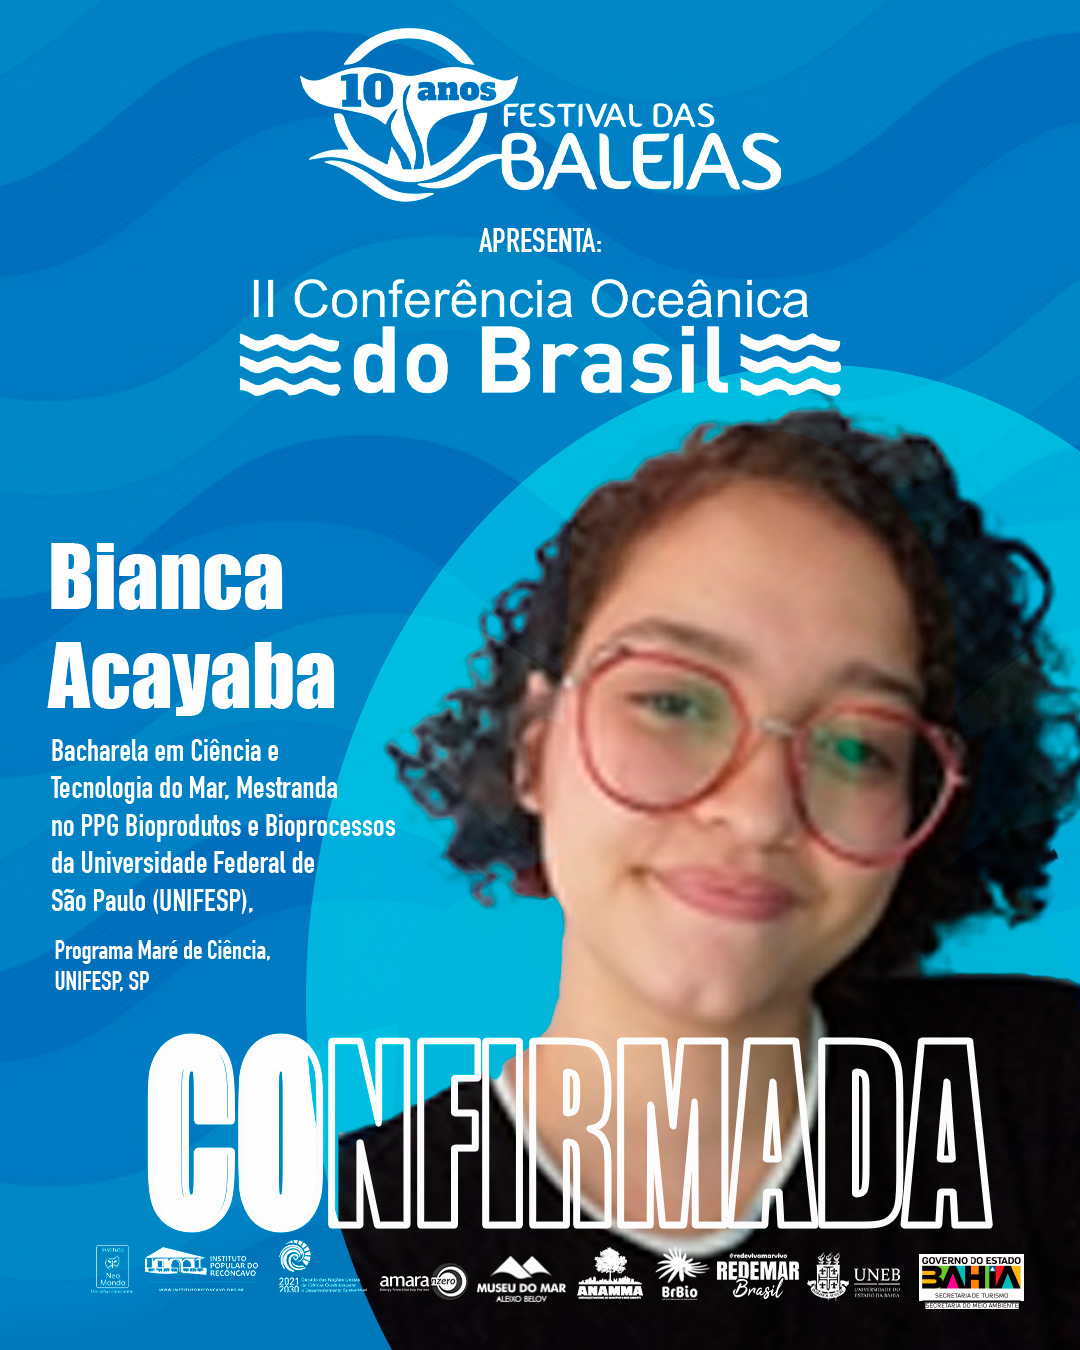 Bianca Acayaba